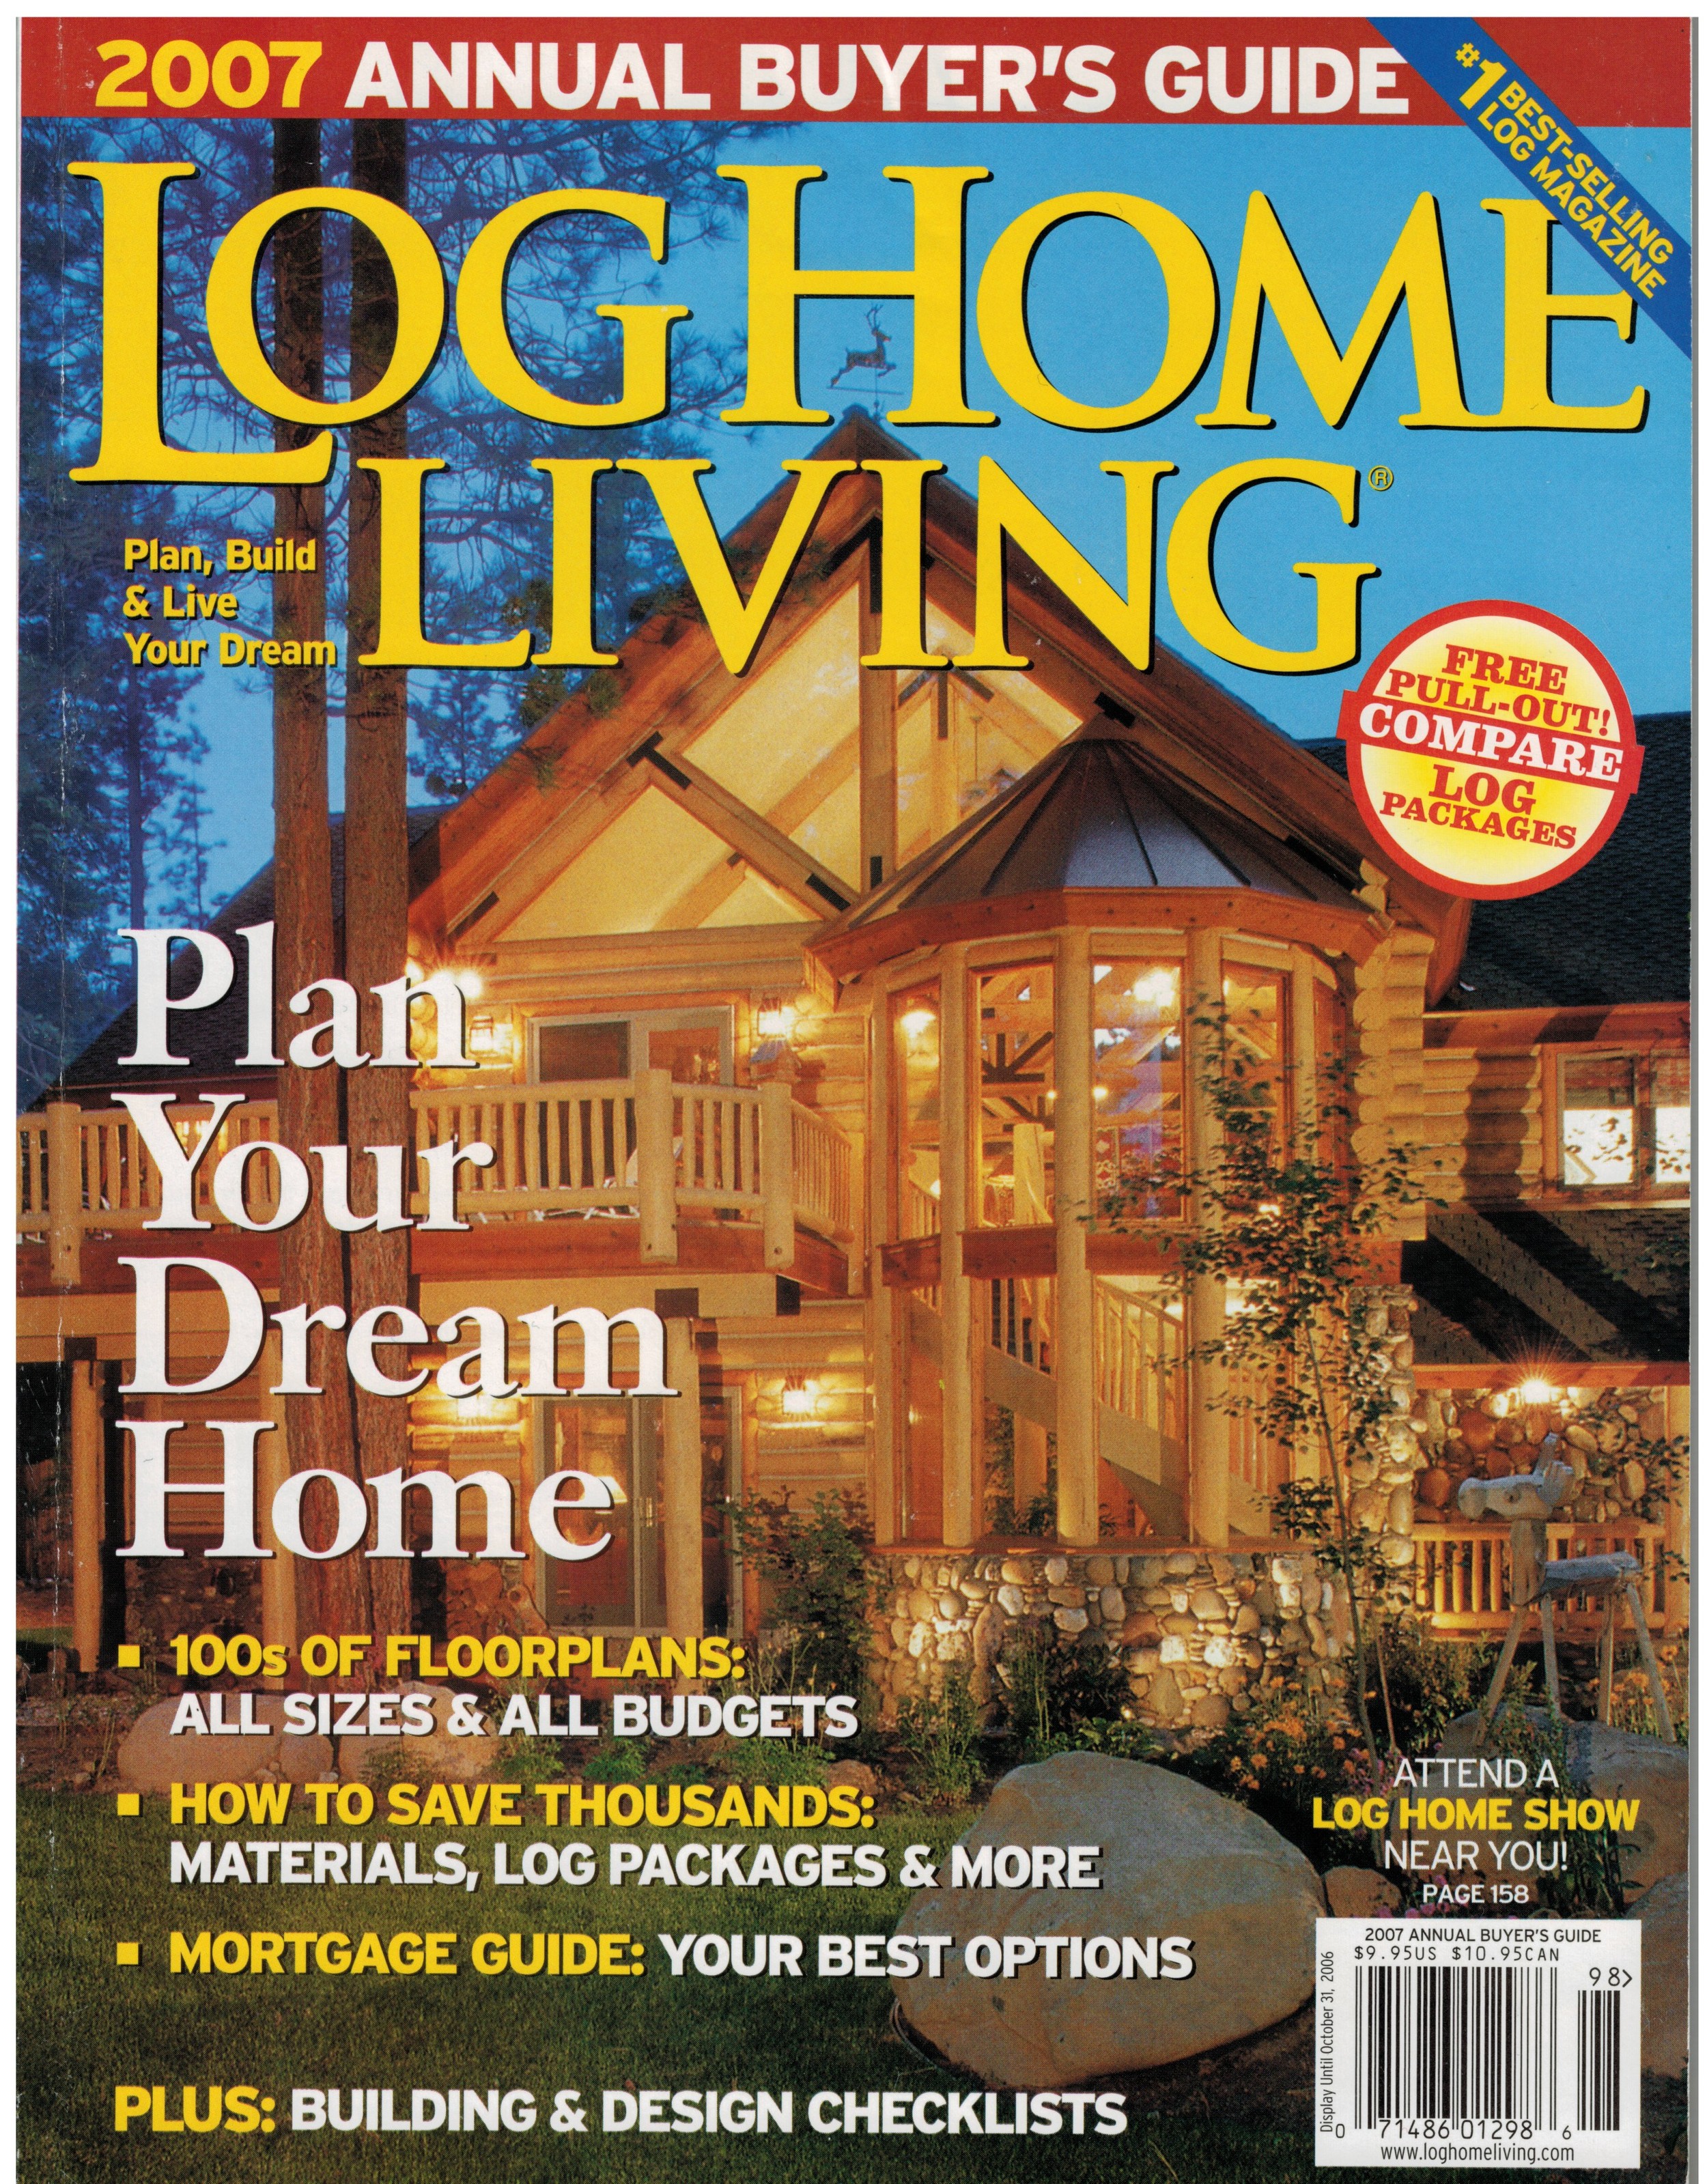 12 Log Home Living-2007 Annual Buyers Guide.jpg